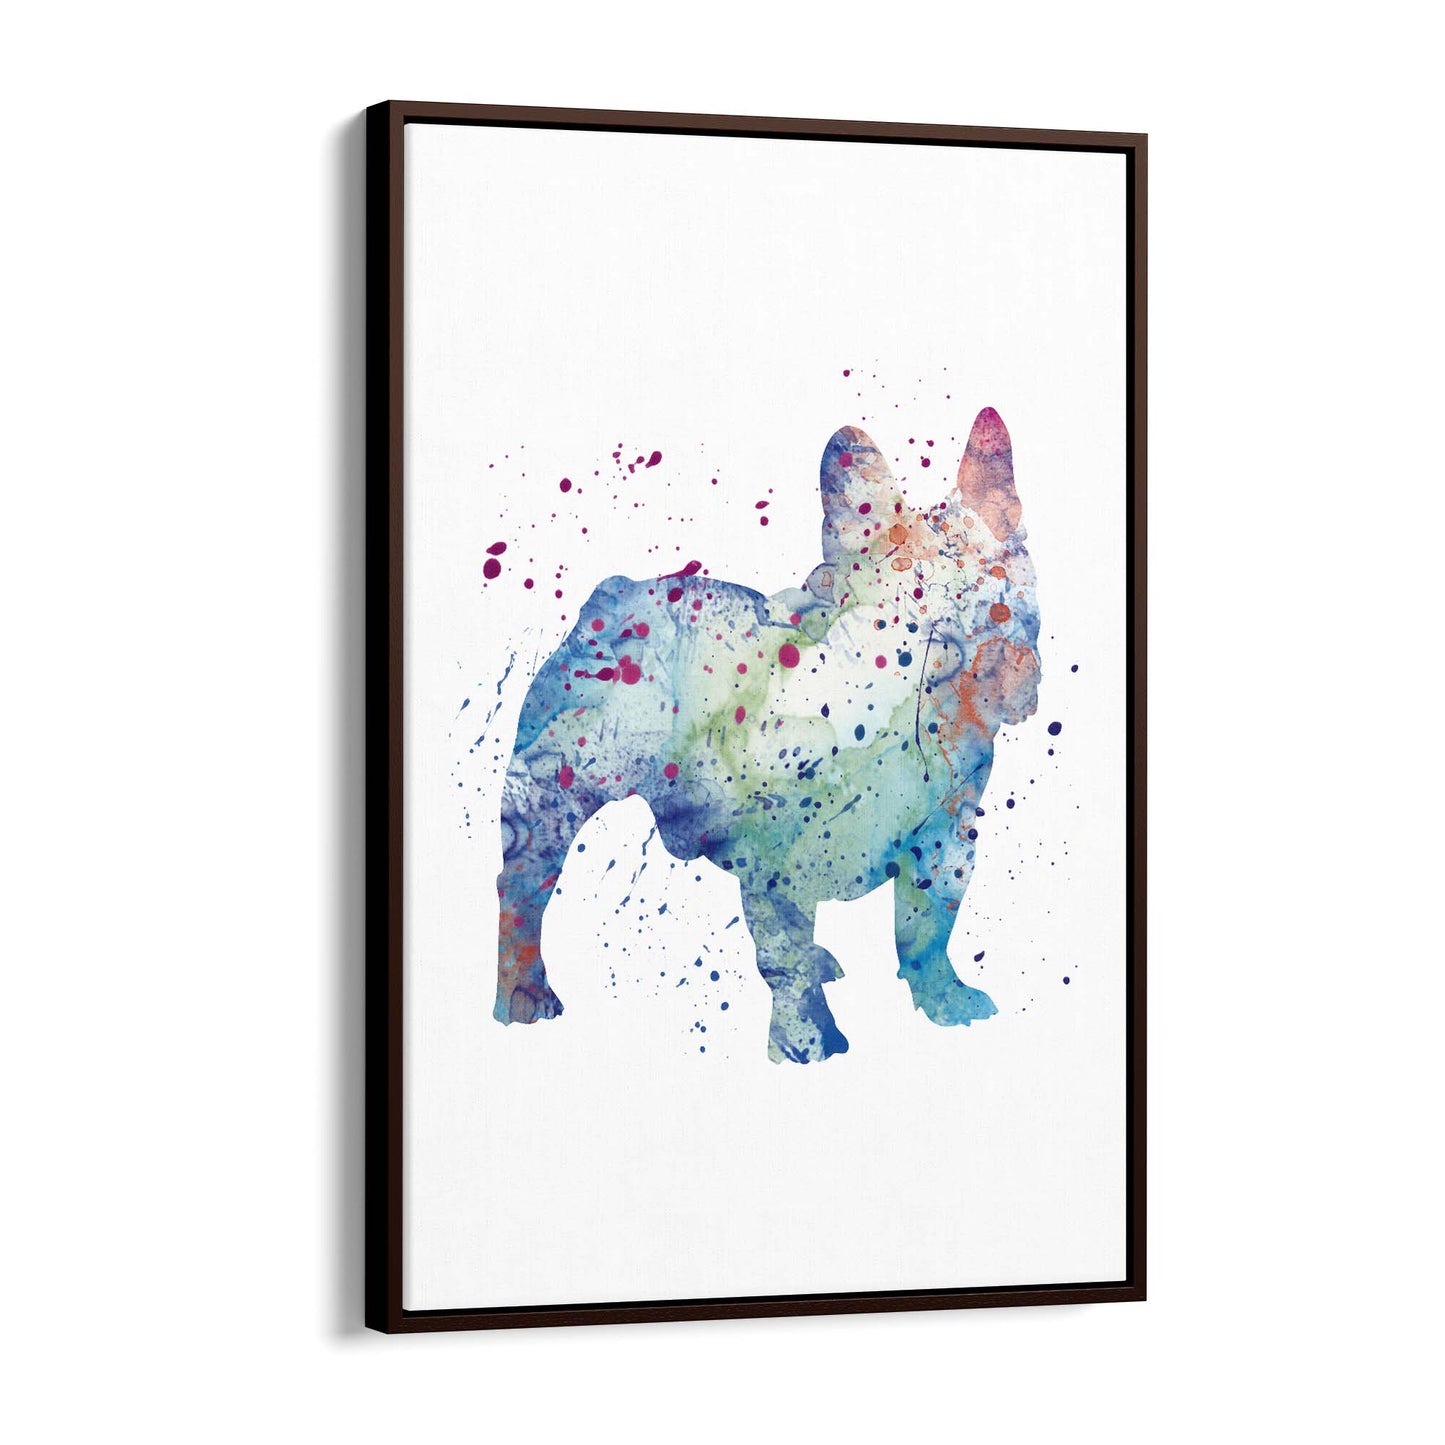 French Bulldog Painting Wall Art Print - The Affordable Art Company